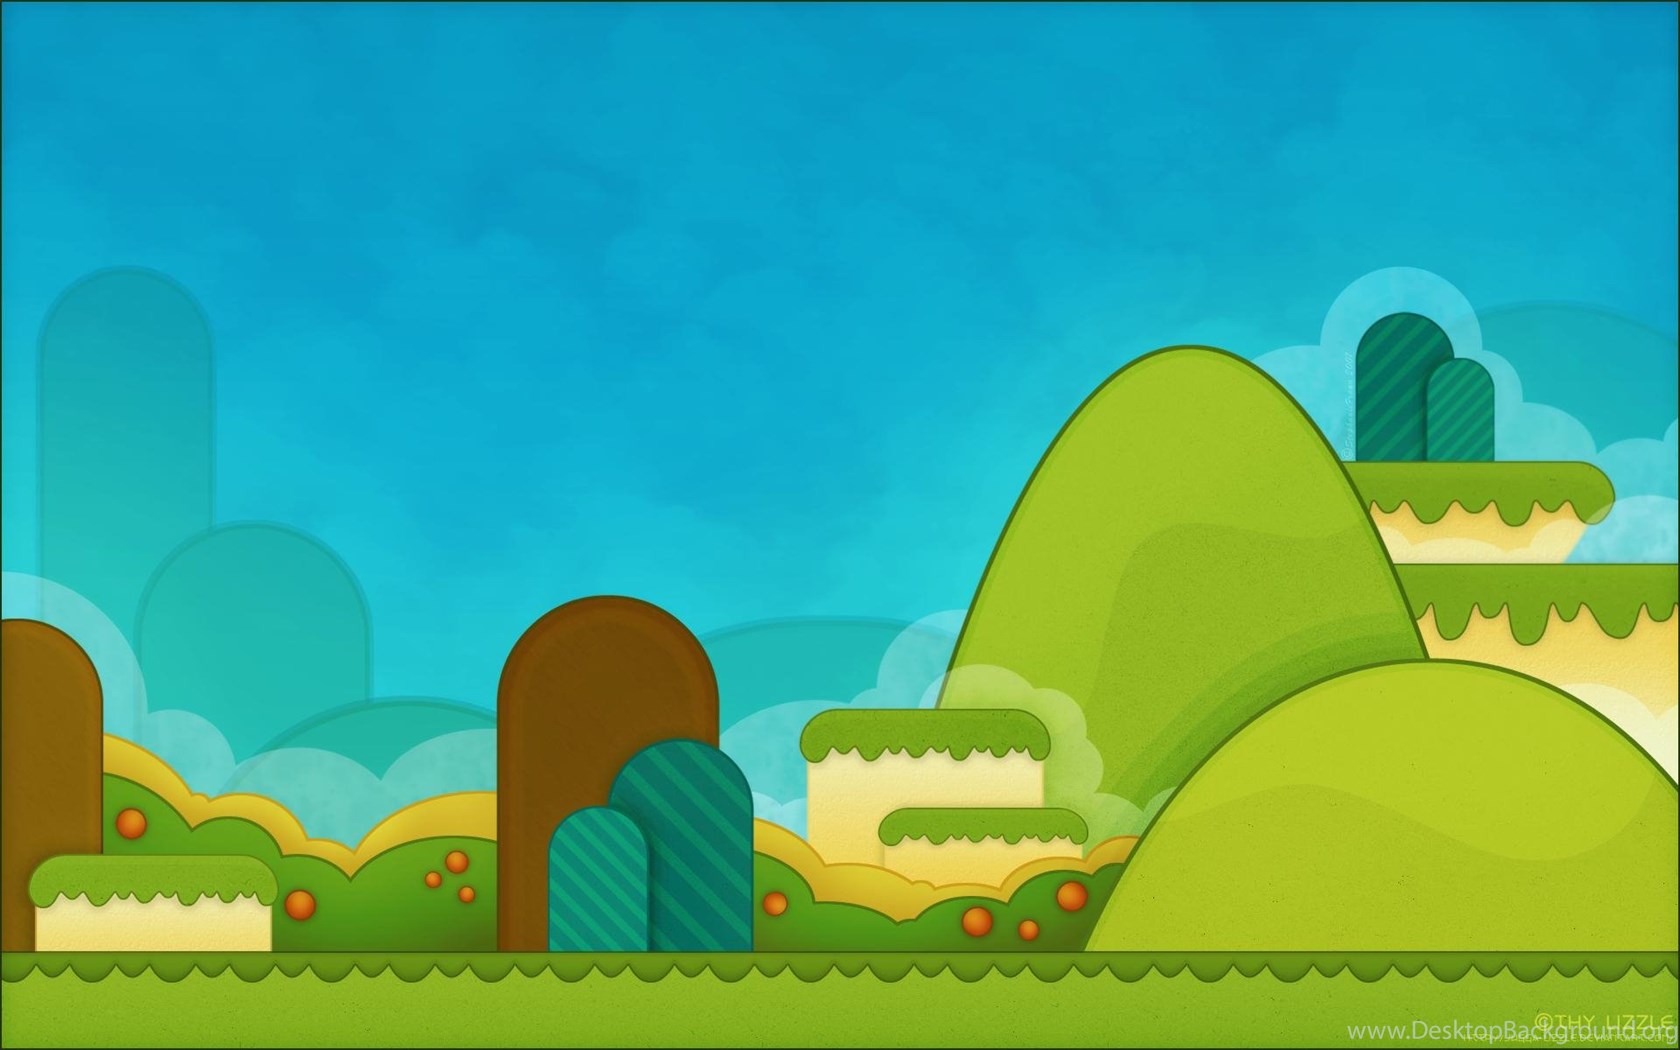 Super Mario Backgrounds Wallpapers Cave Desktop Background